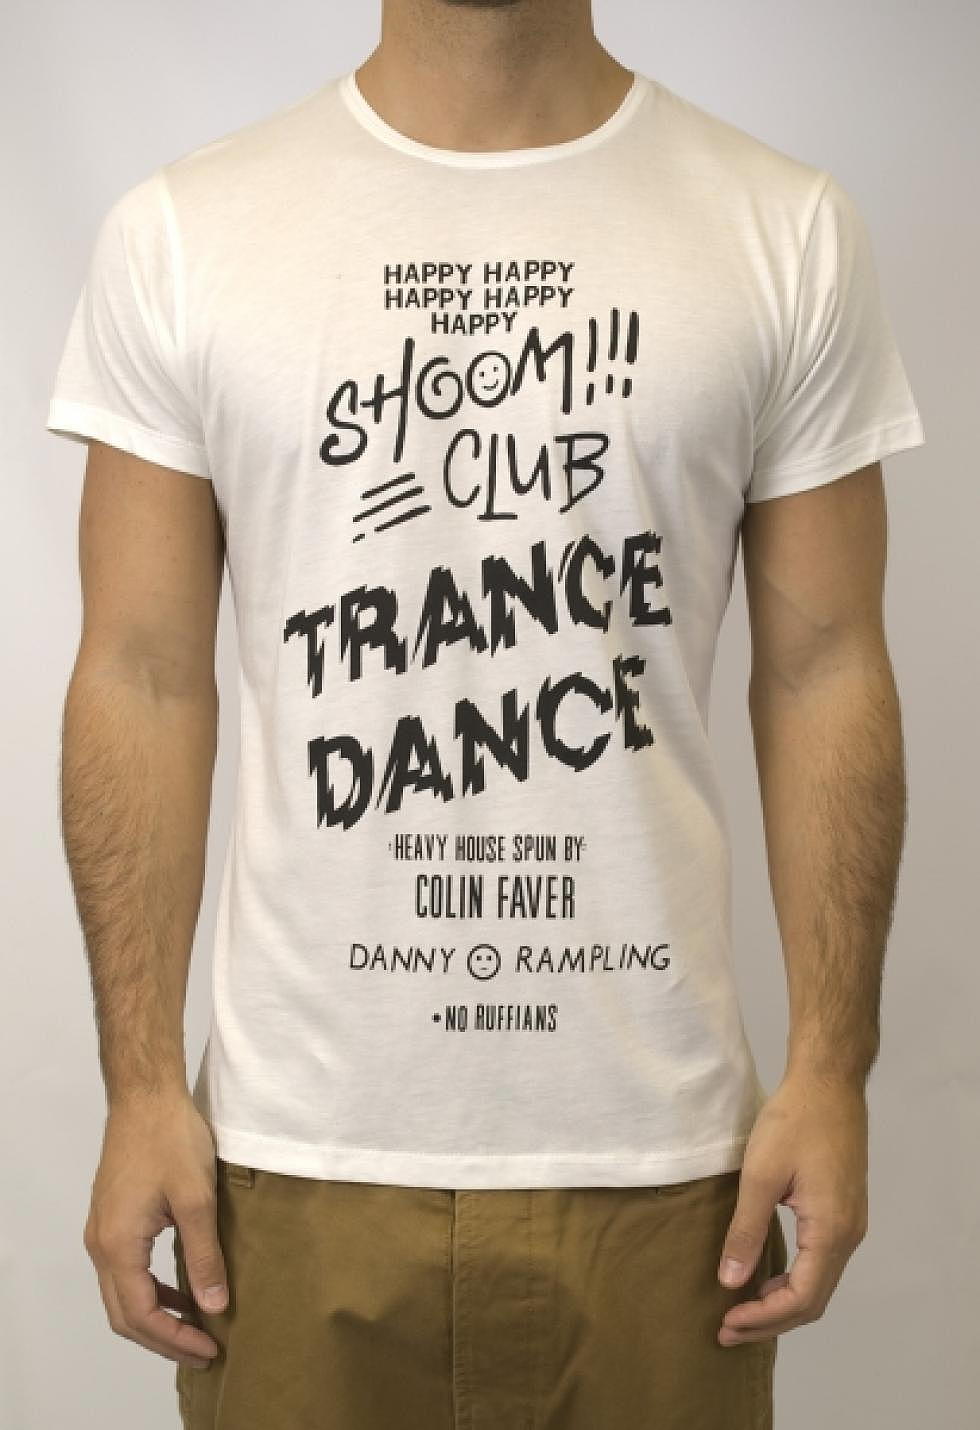 Trance dance flyer T-Shirt to commemorate Legendary Shoom Club